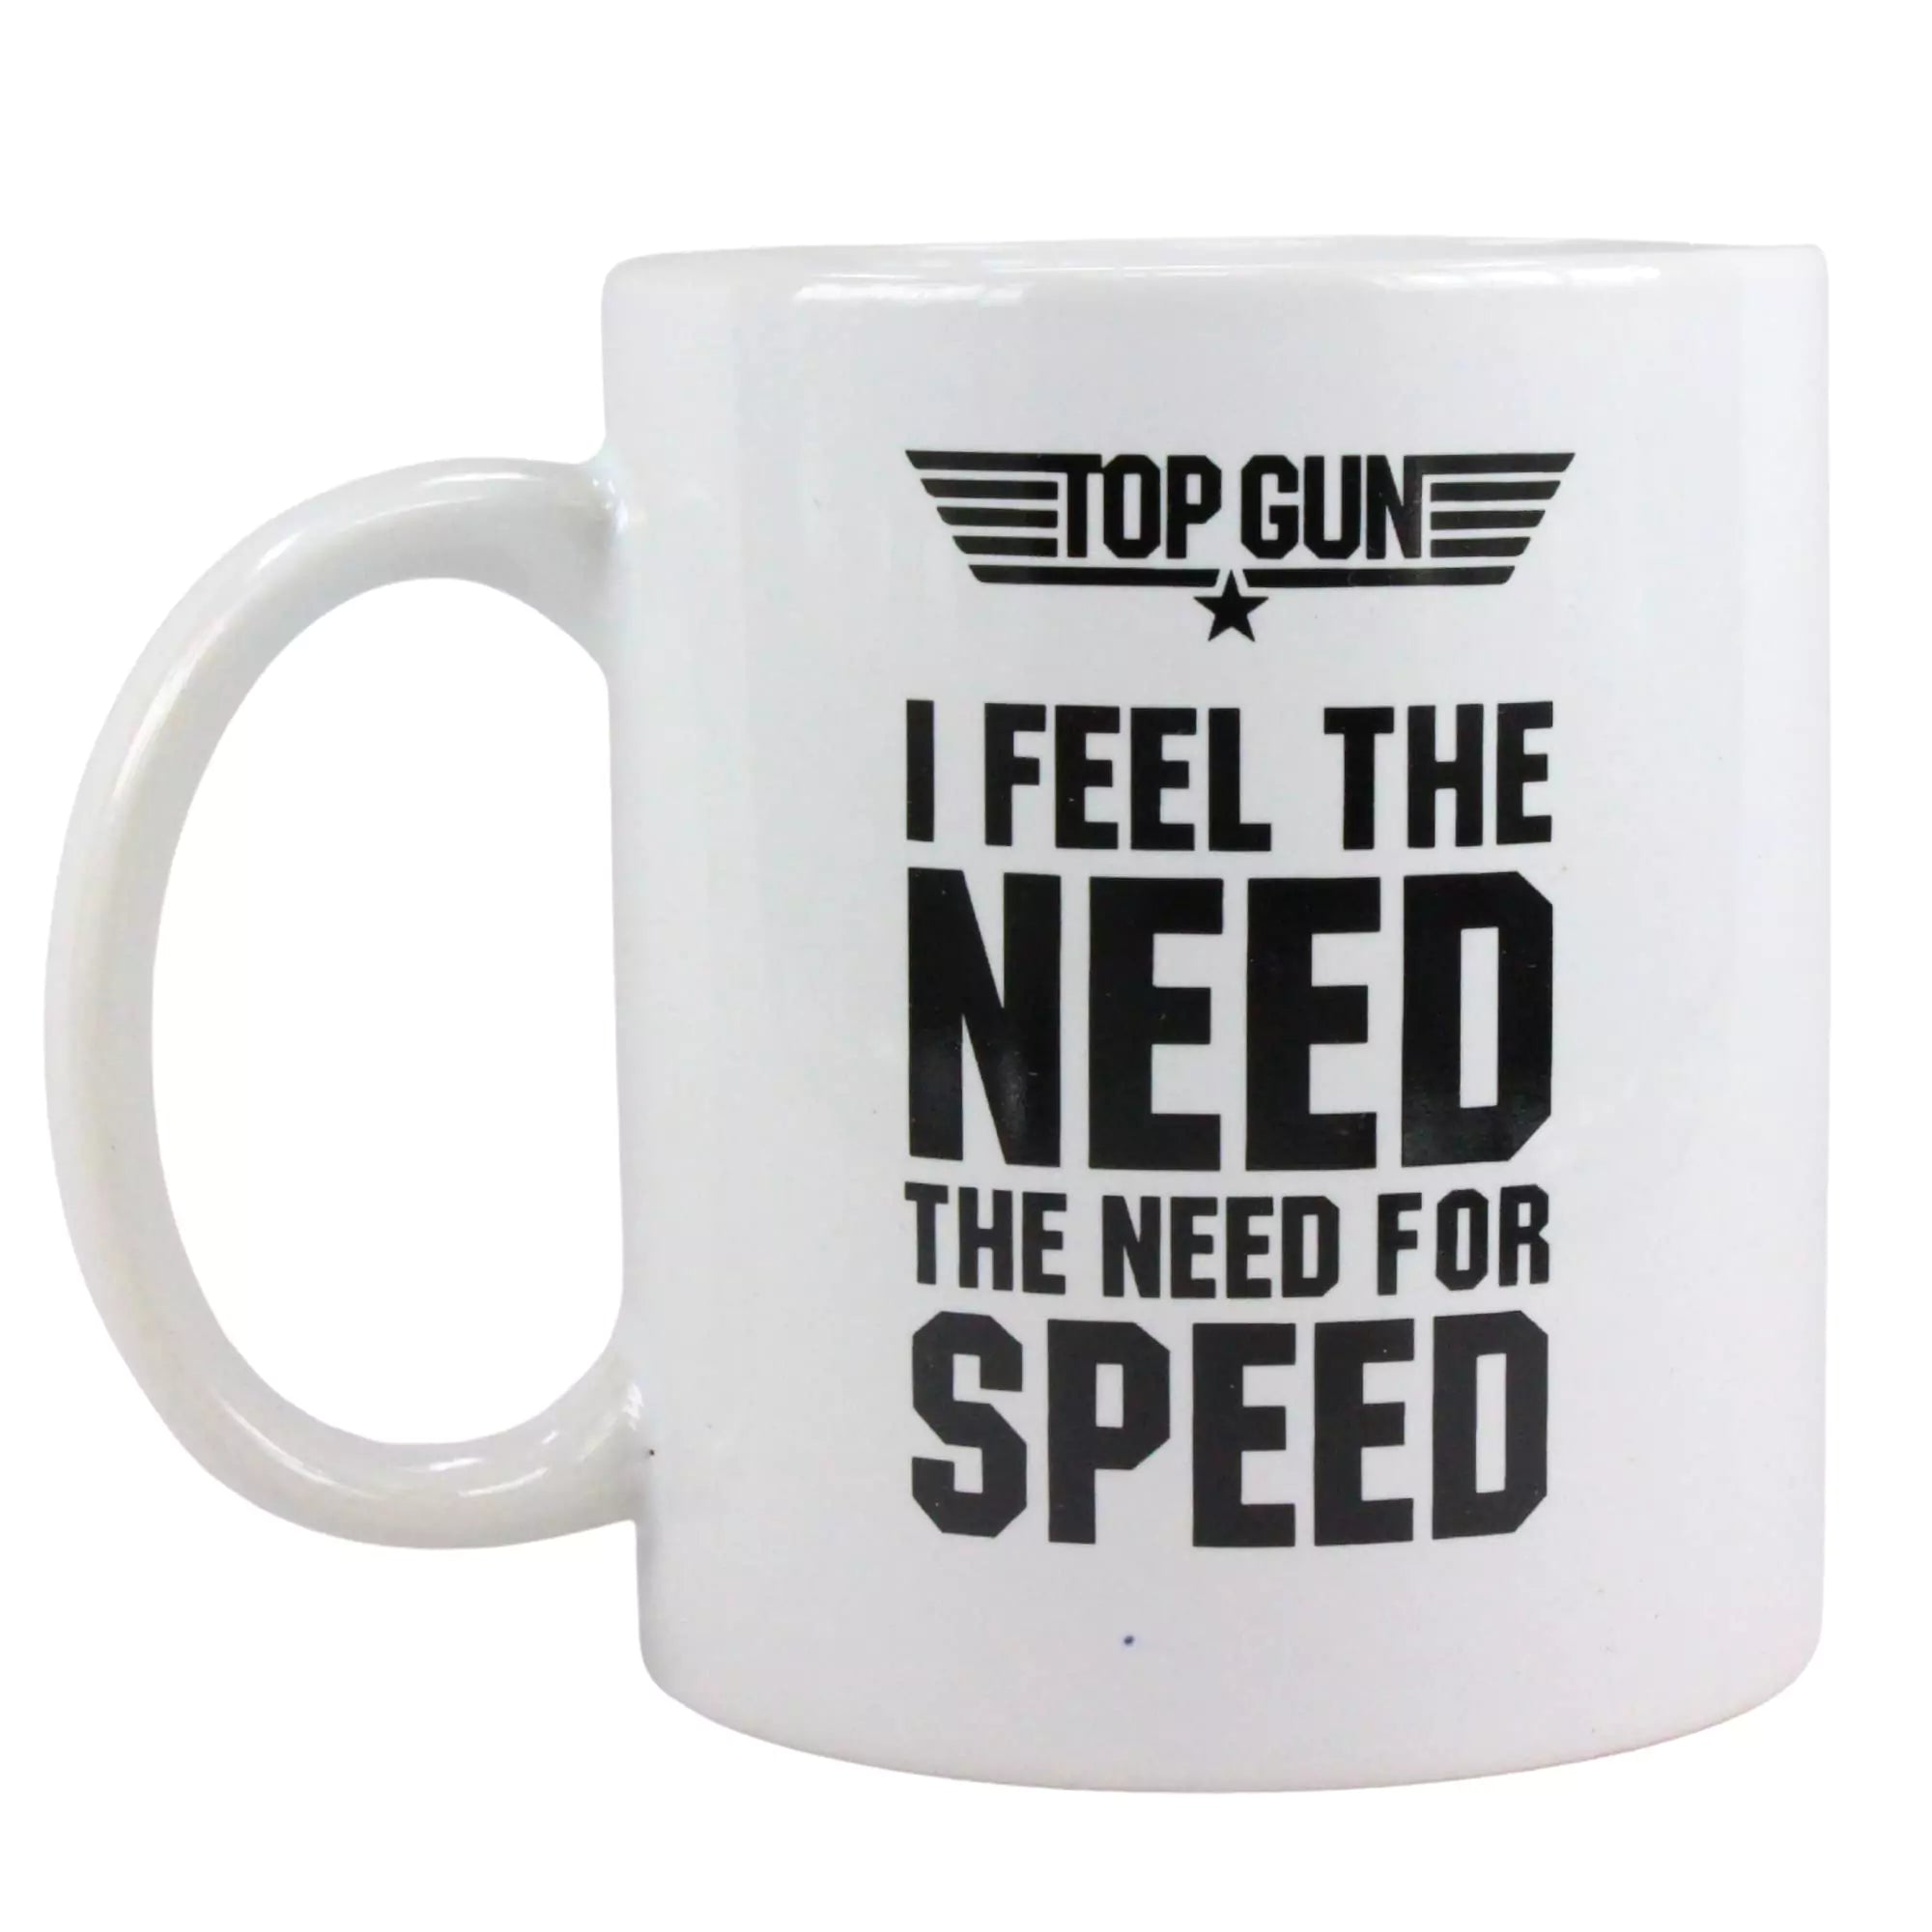 Top Gun Maverick Mug Twin Pack - 315ml Maverick Plane & Need for Speed - Toptoys2u